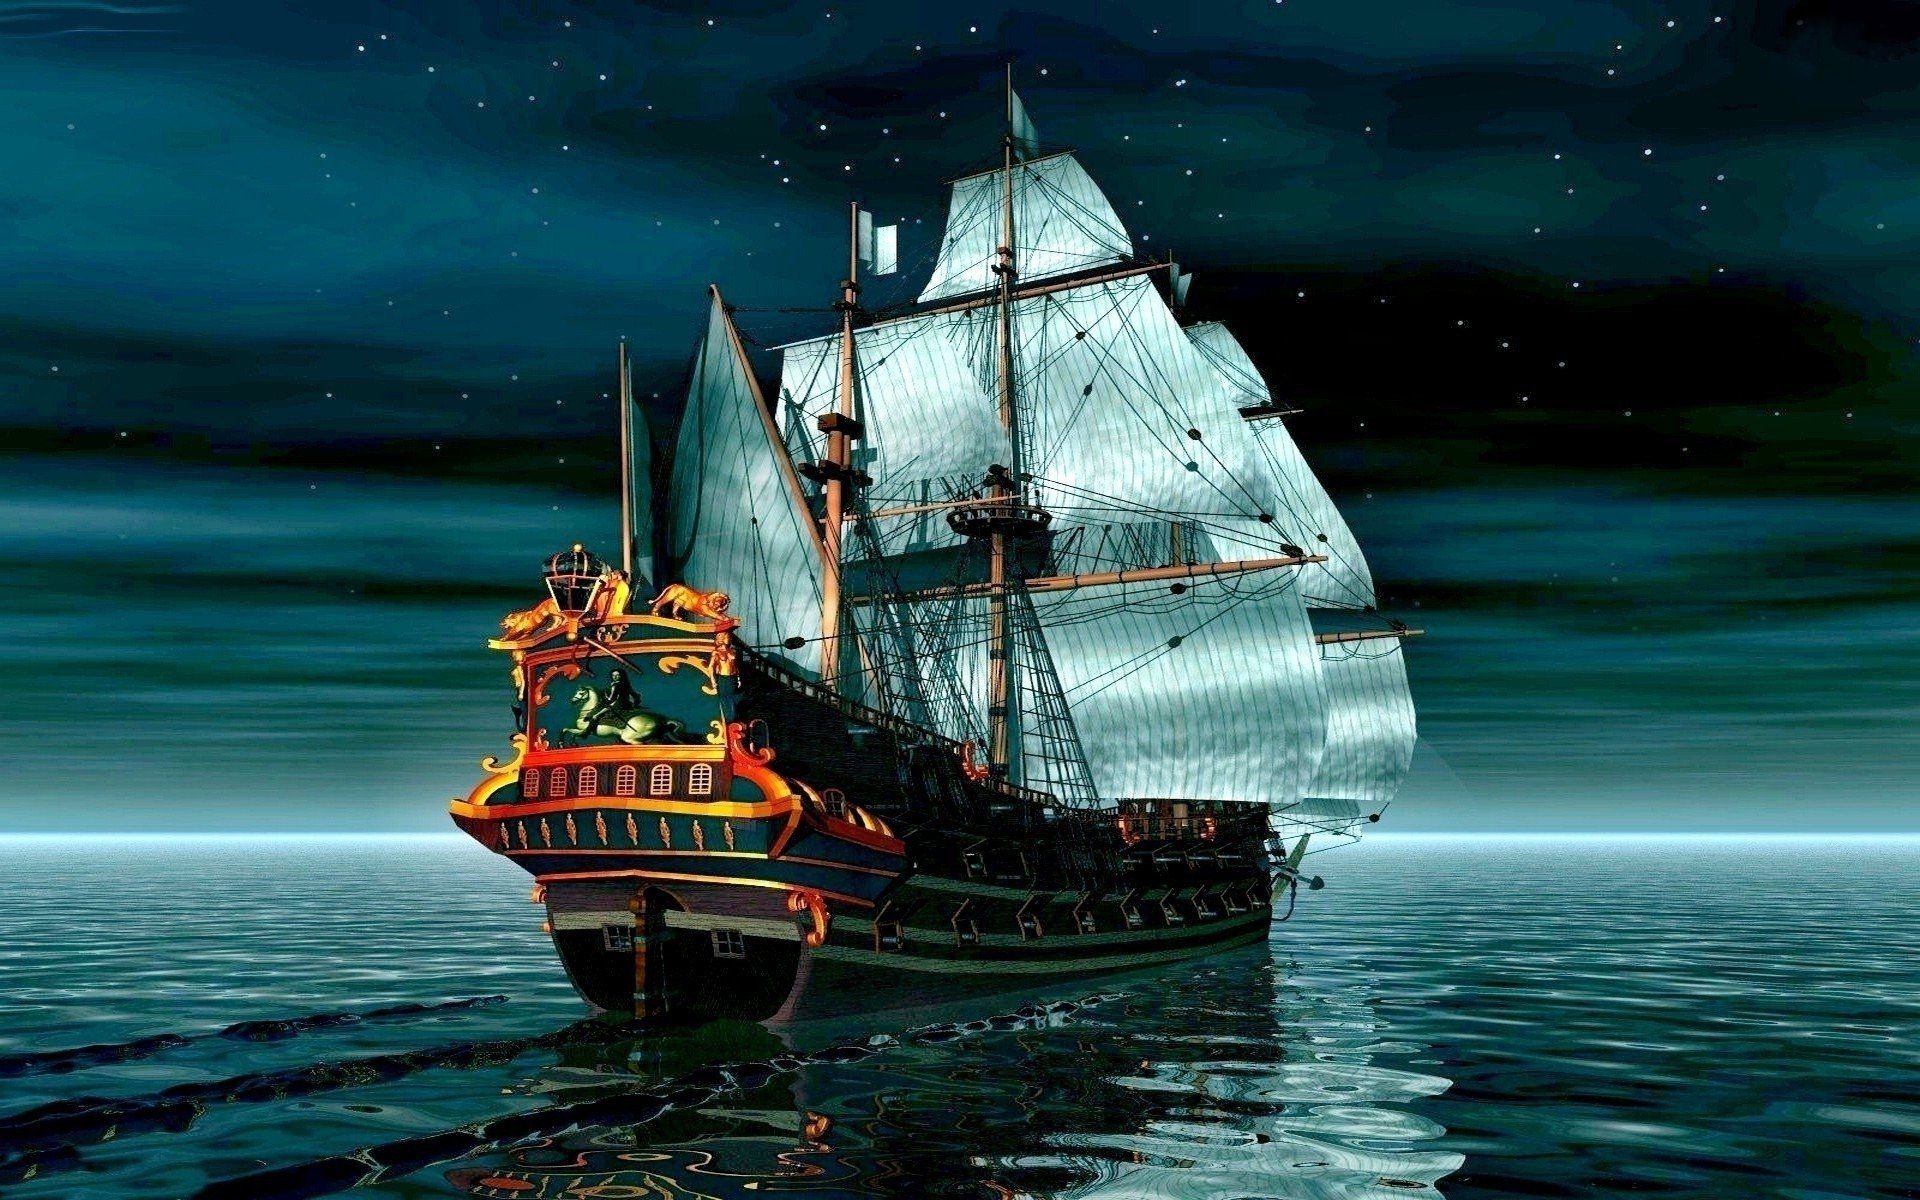 Fondos de pantalla de barcos piratas - FondosMil